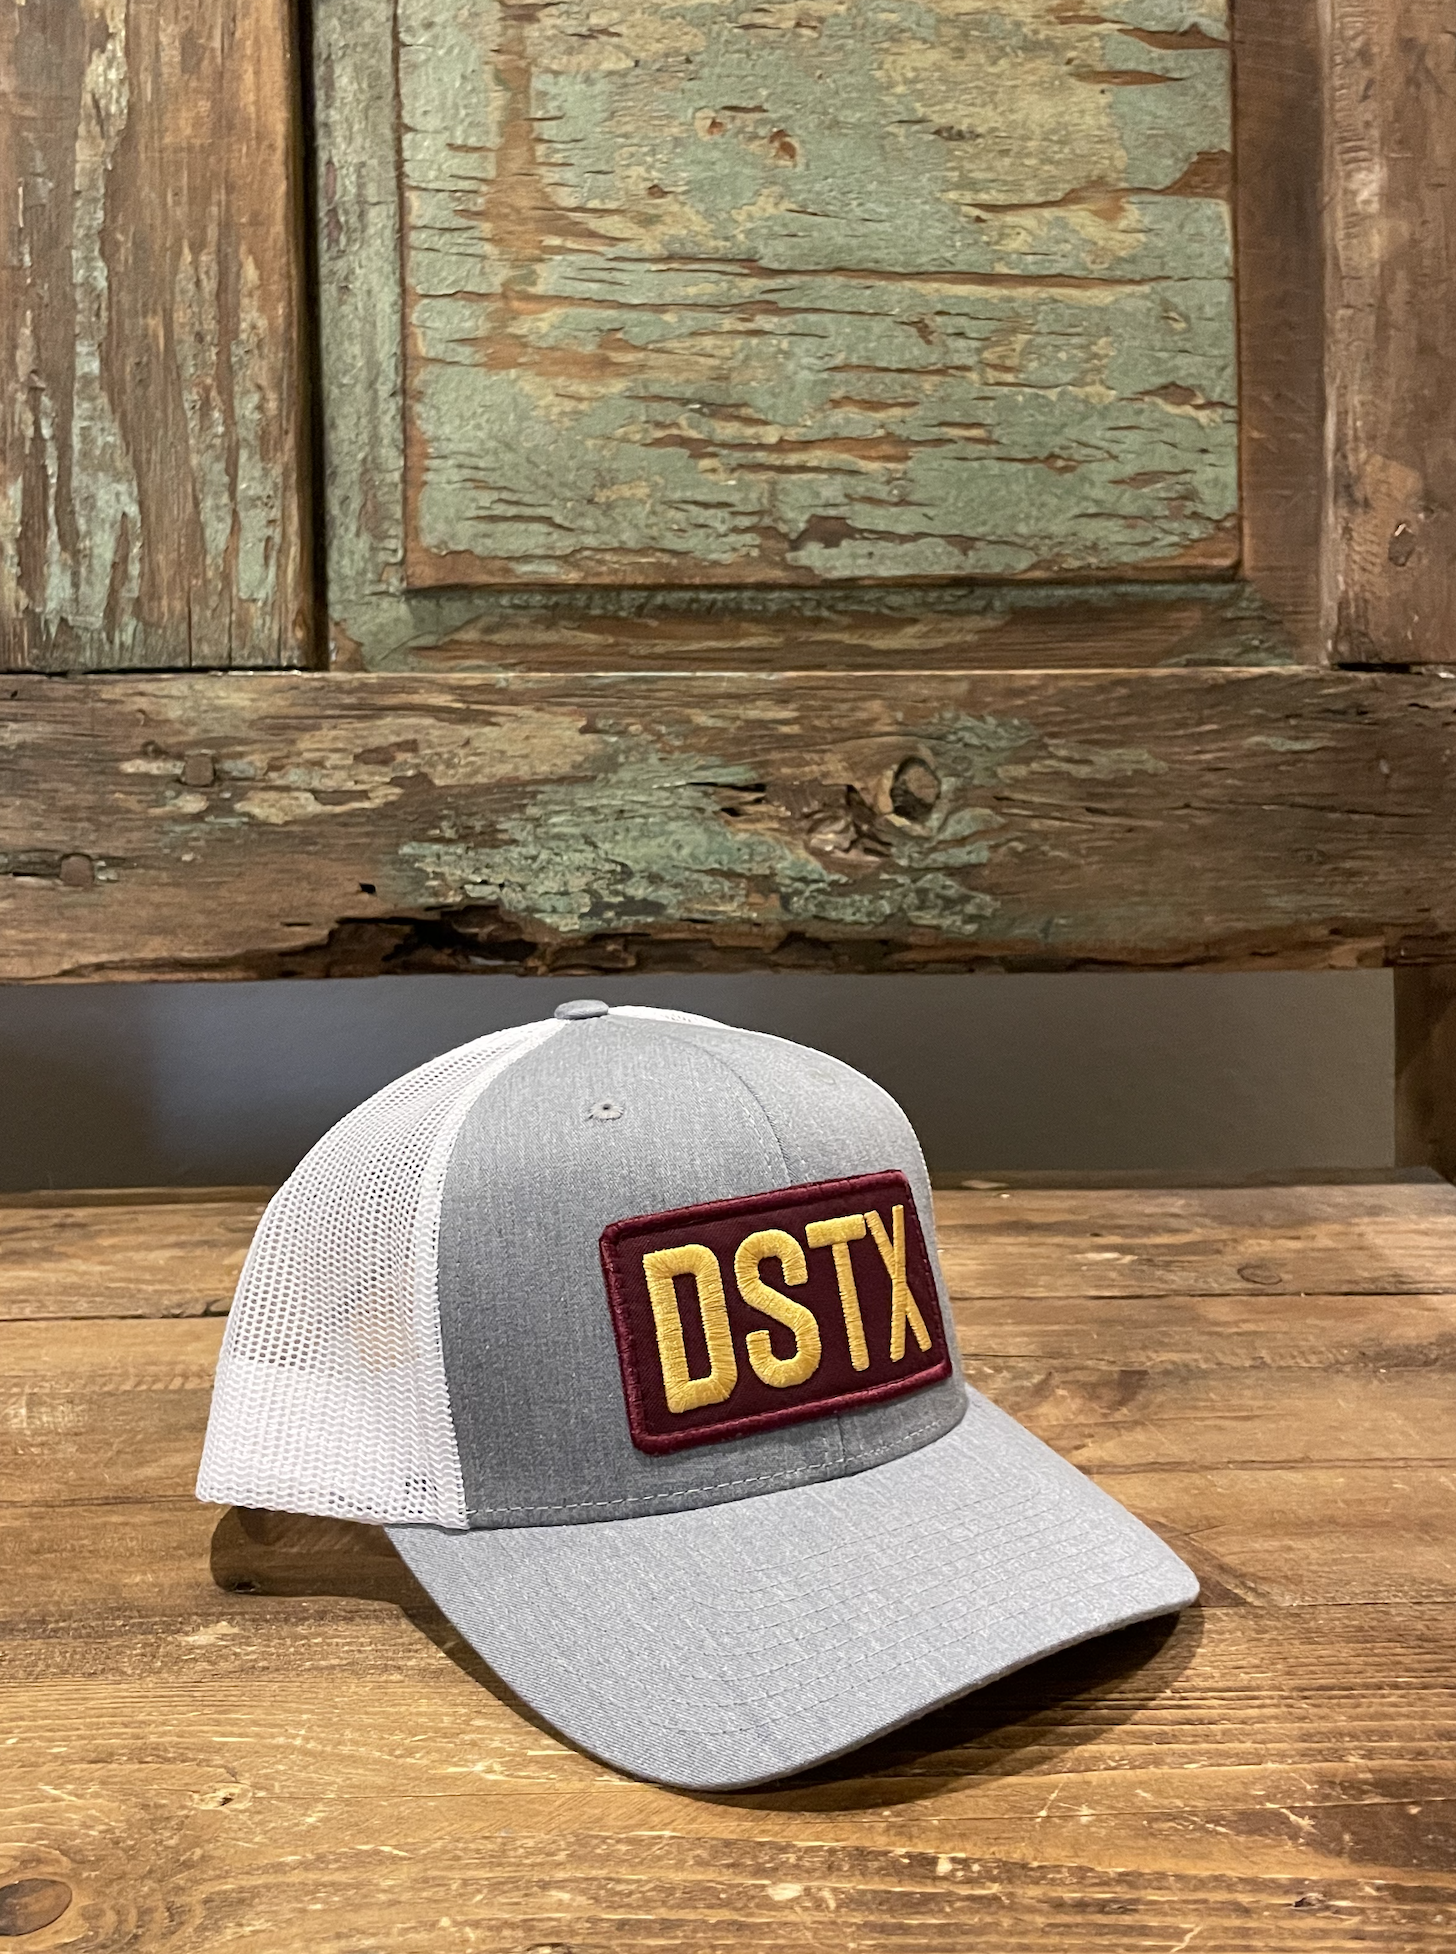 DSTX Hat